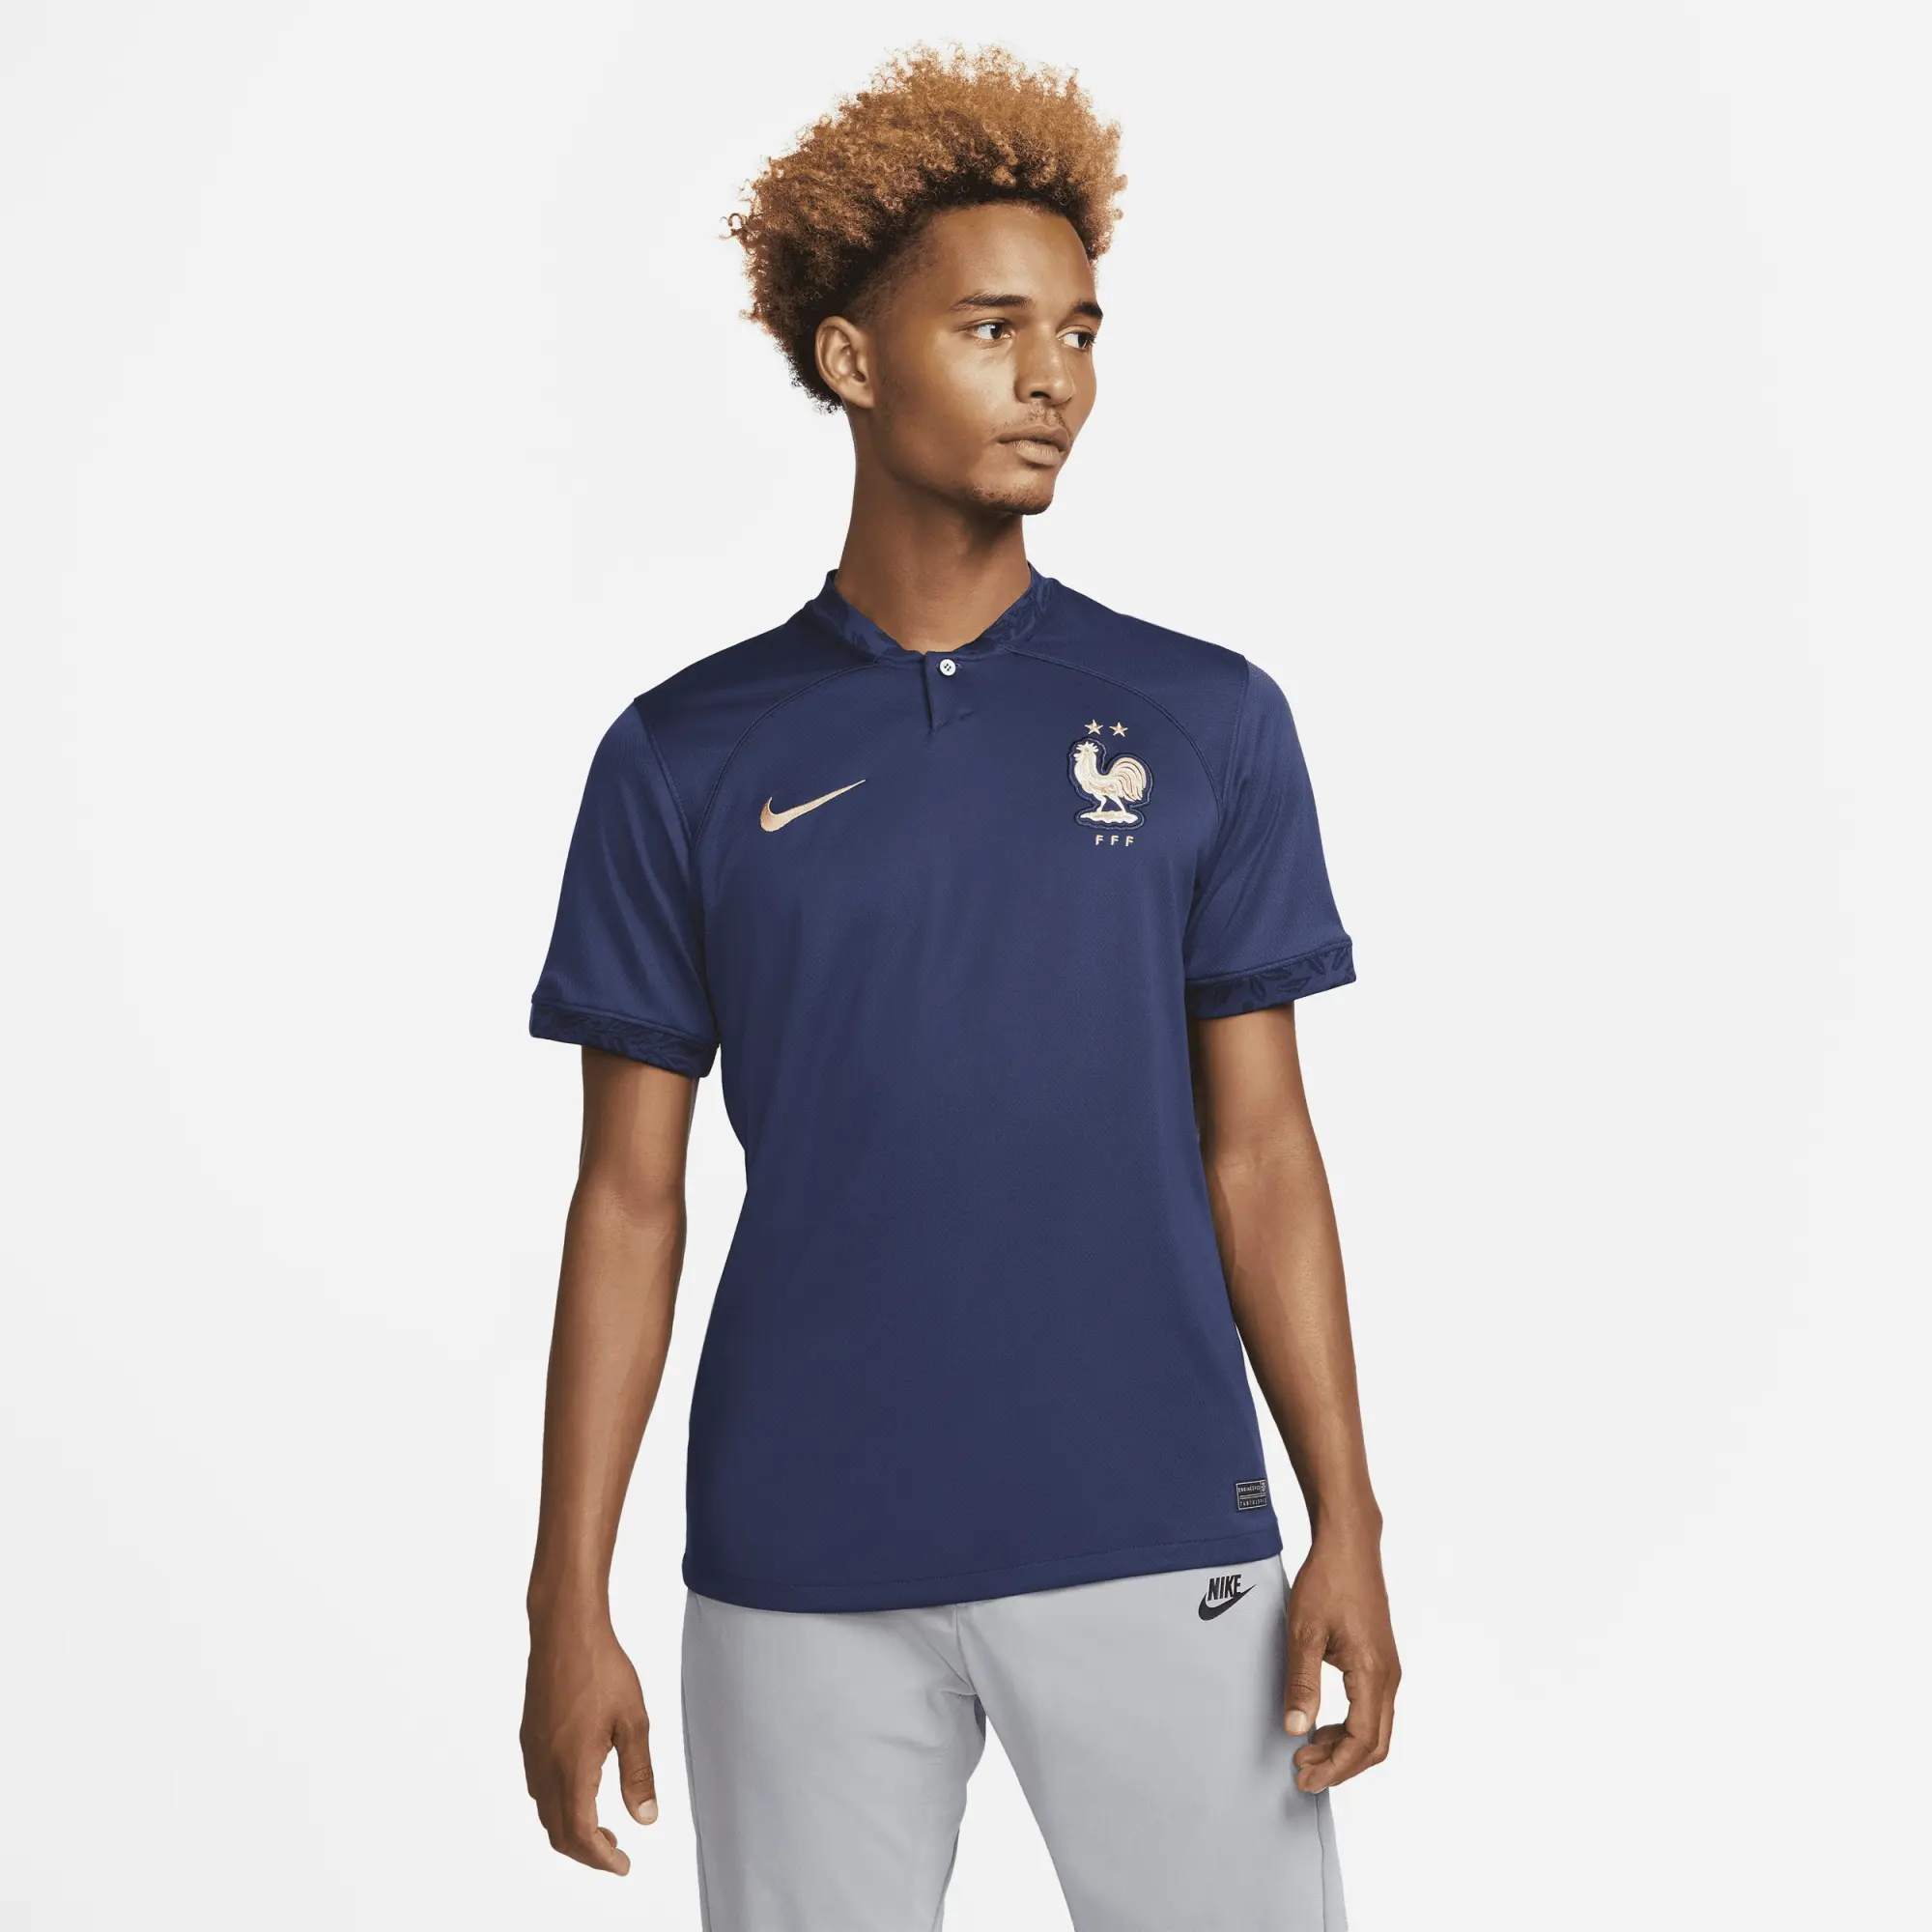 FFF 2022/23 Stadium Home Men's Nike Dri-FIT Football Shirt - Blue